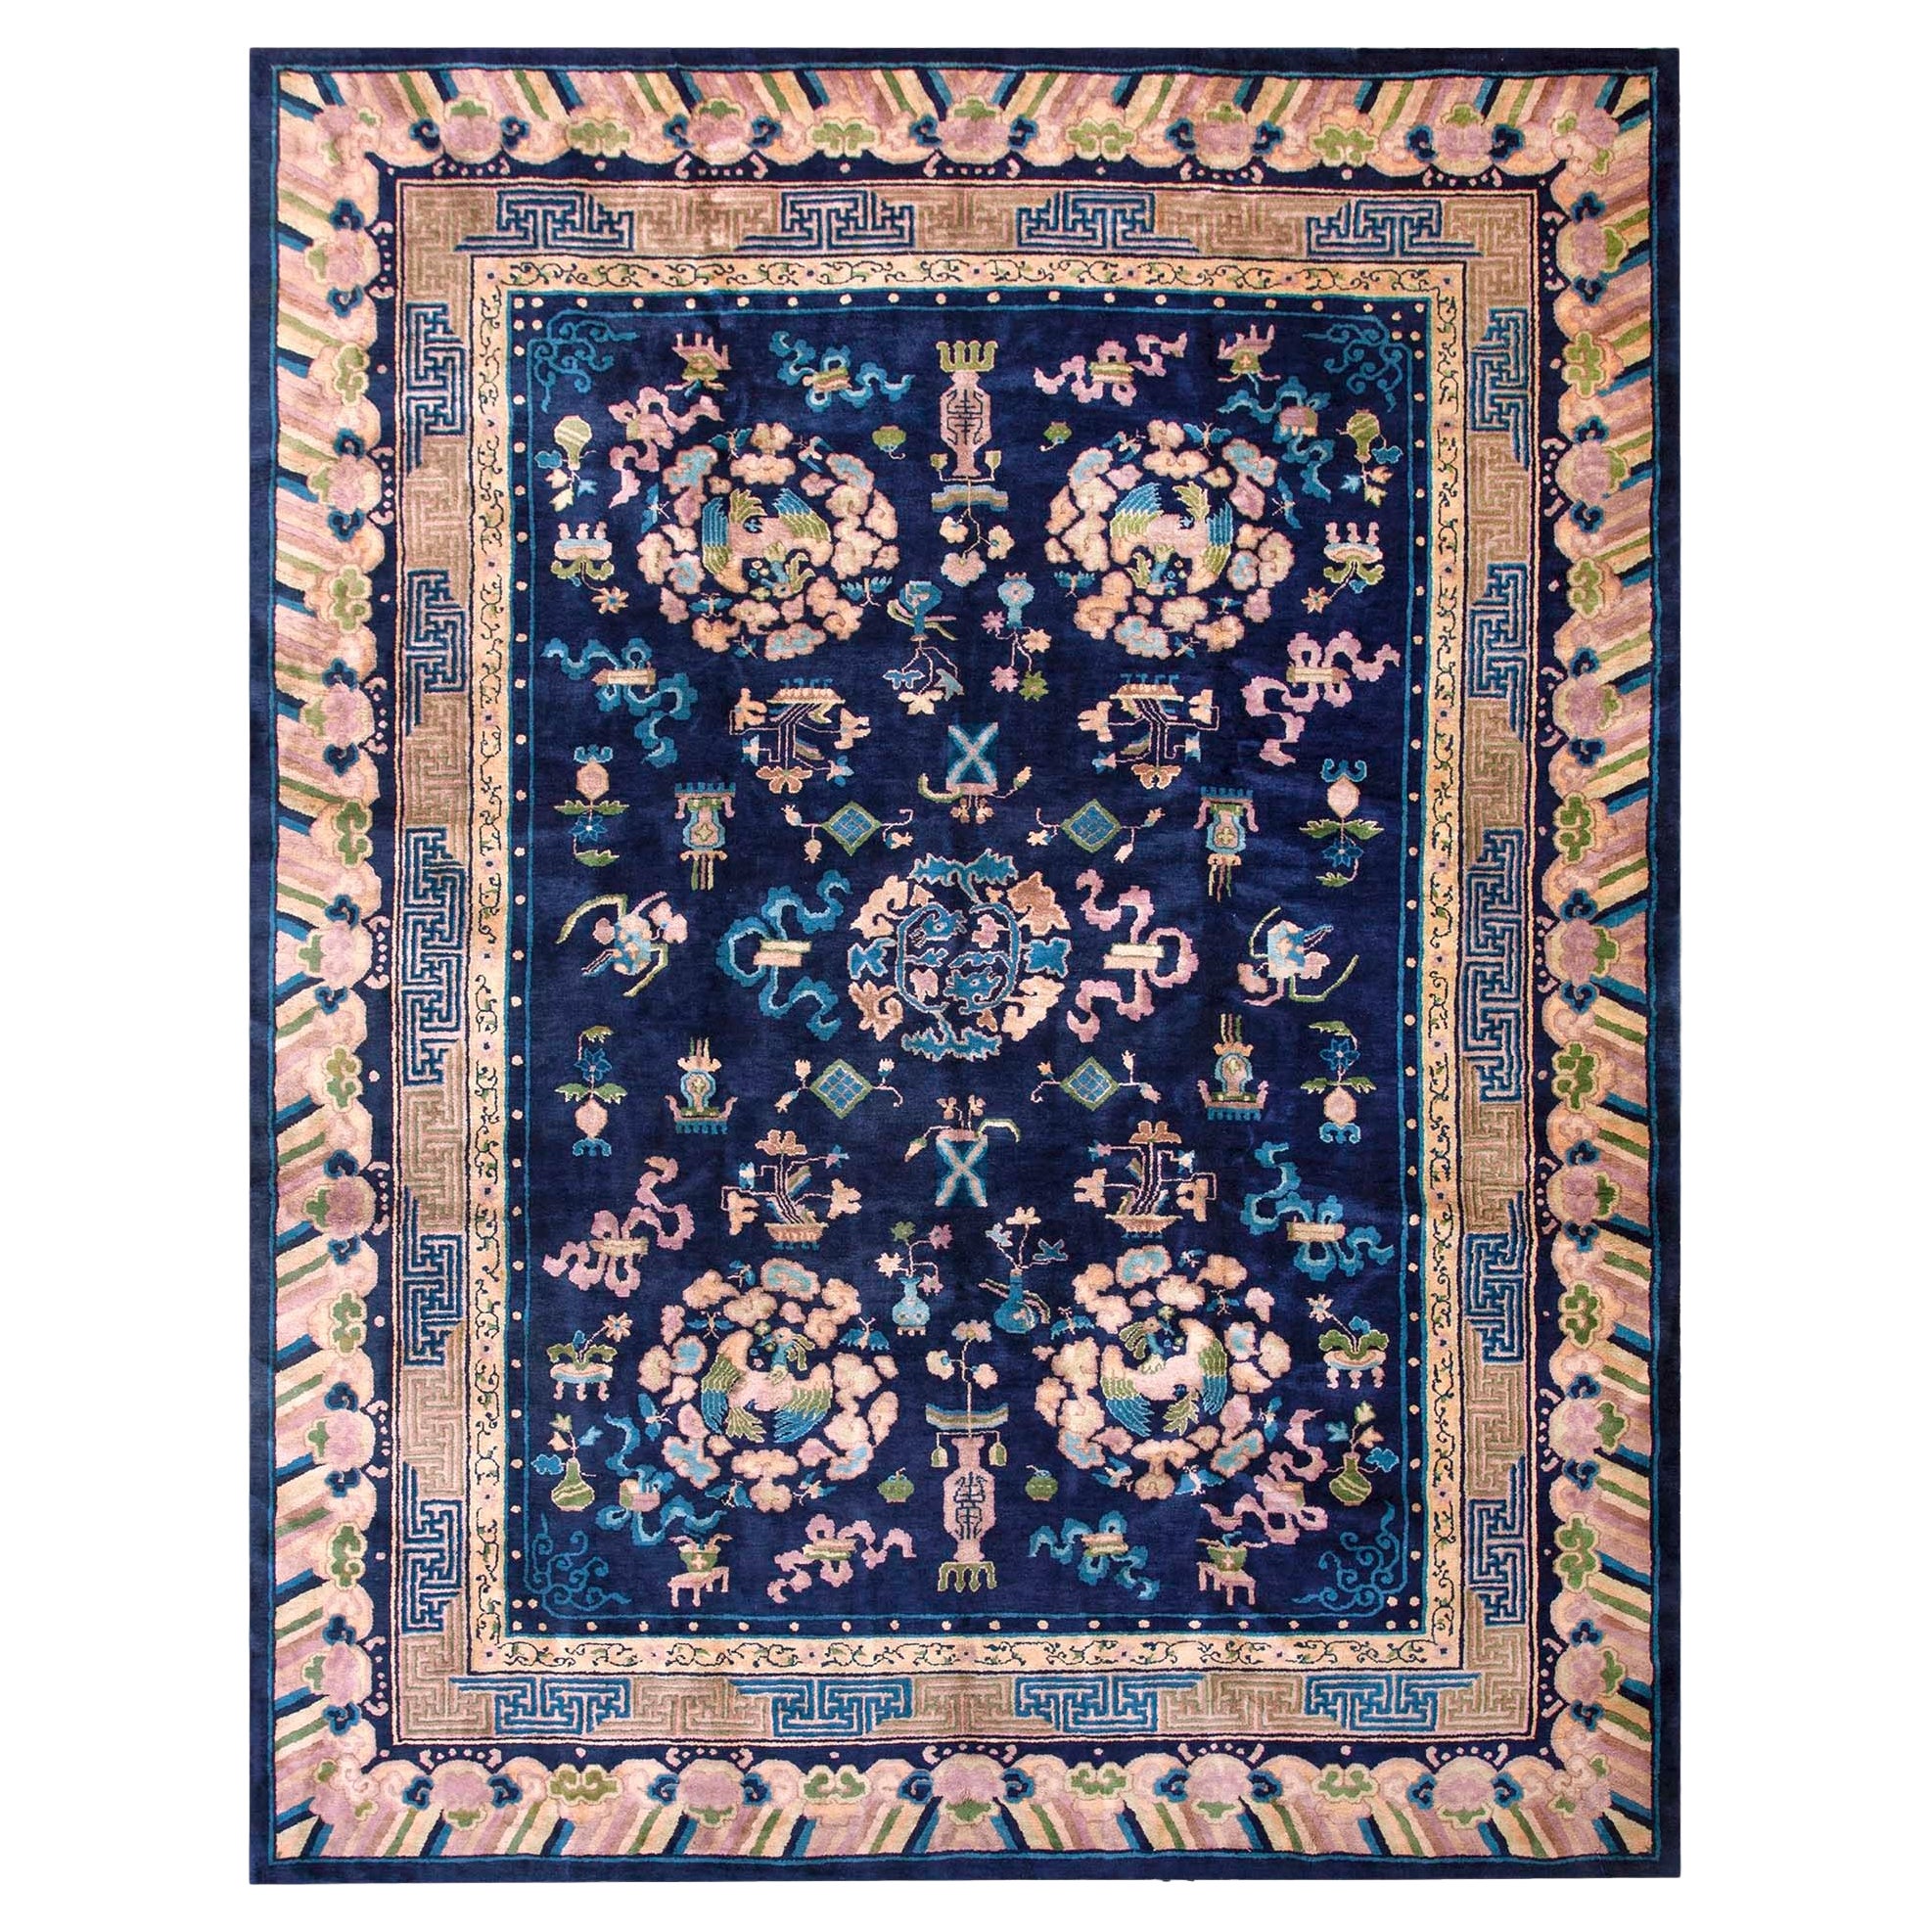 Early 20th Century Chinese Peking Carpet ( 9' x 11'10" - 275 x 360 )